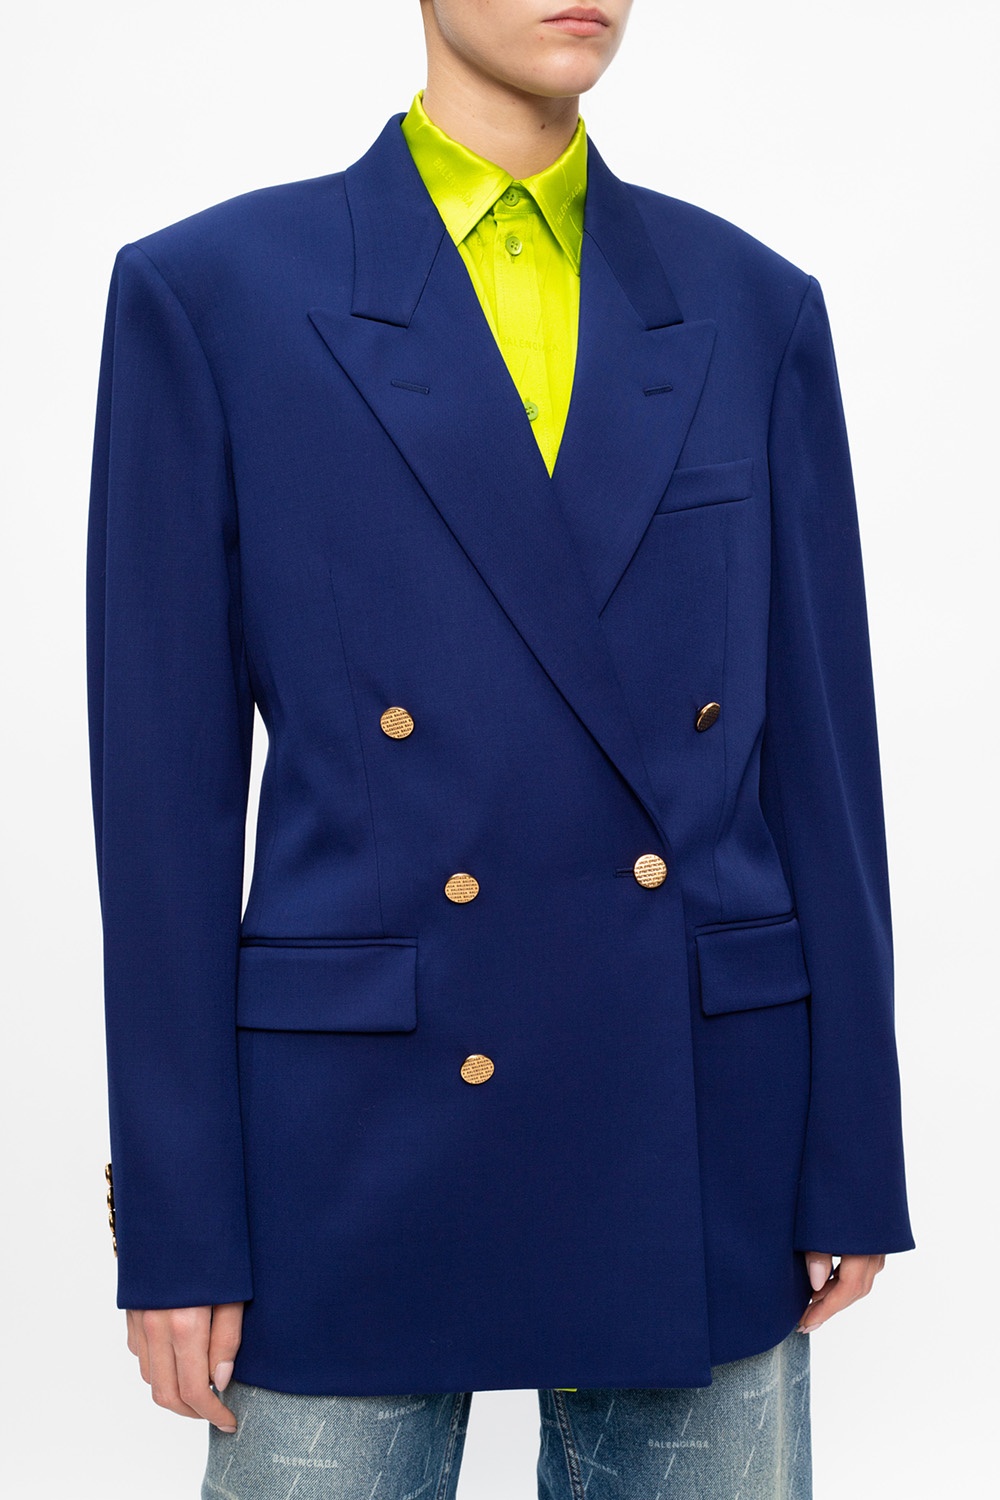 Balenciaga blazer Women's Clothing | Vitkac